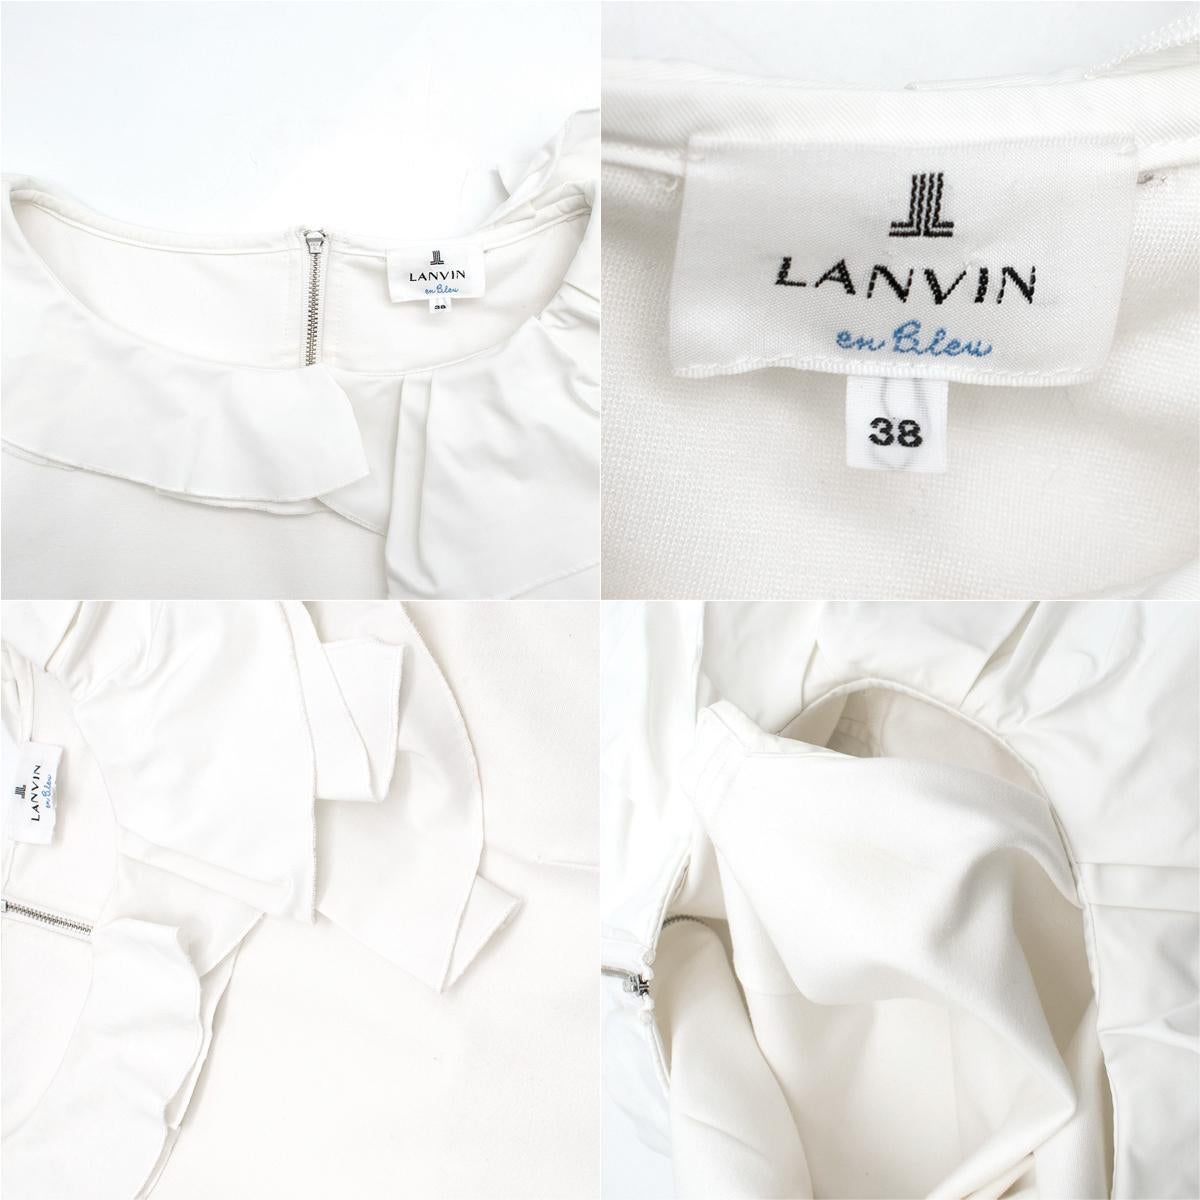 Lanvin En Bleu White Taffeta Ruffled Jersey Top - Size US 6 For Sale 4